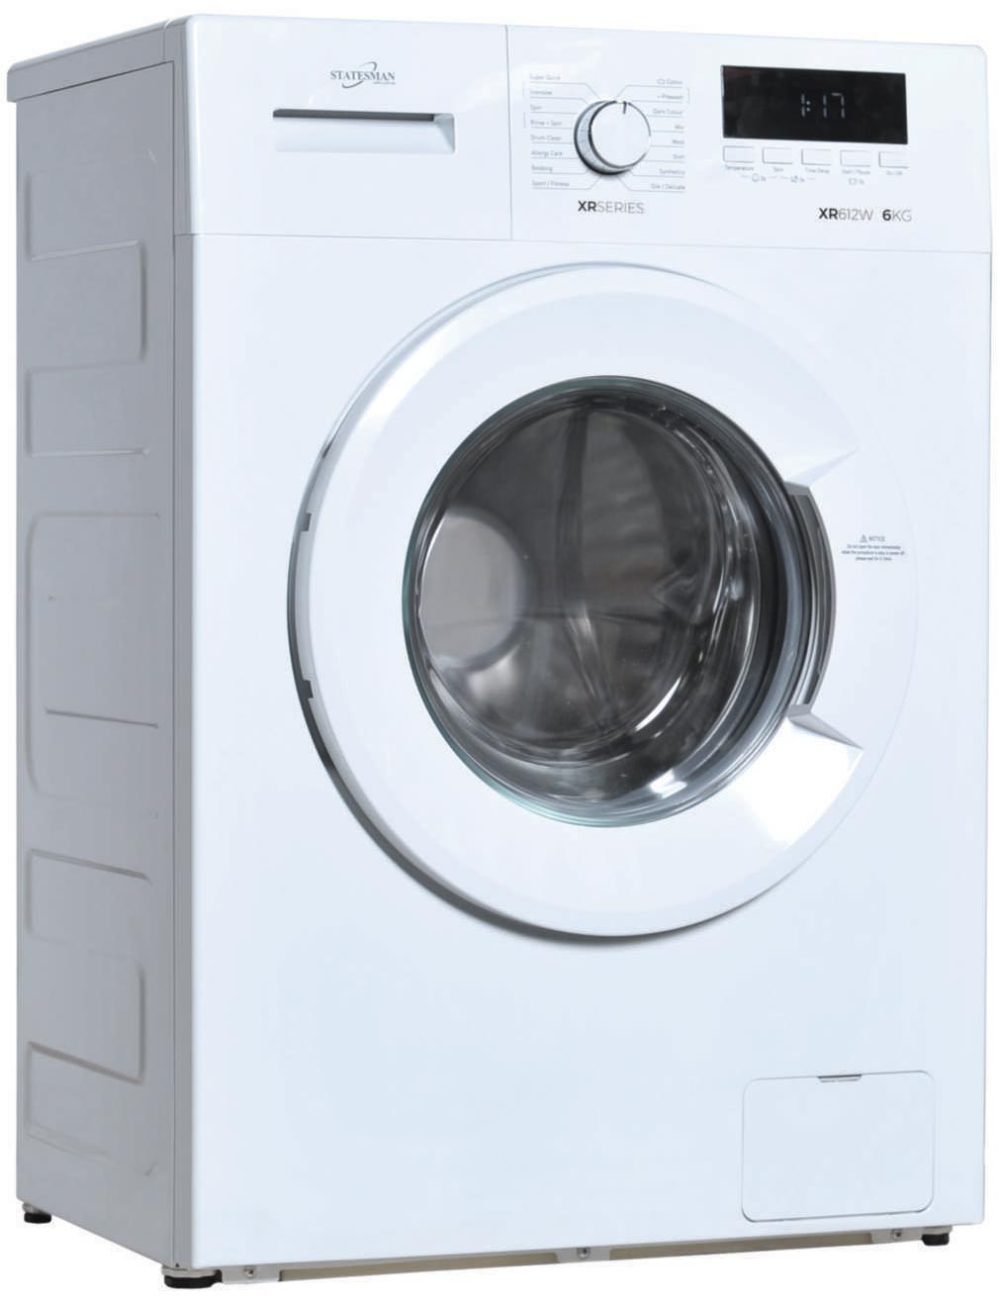 Image of Statesman Washing Machine